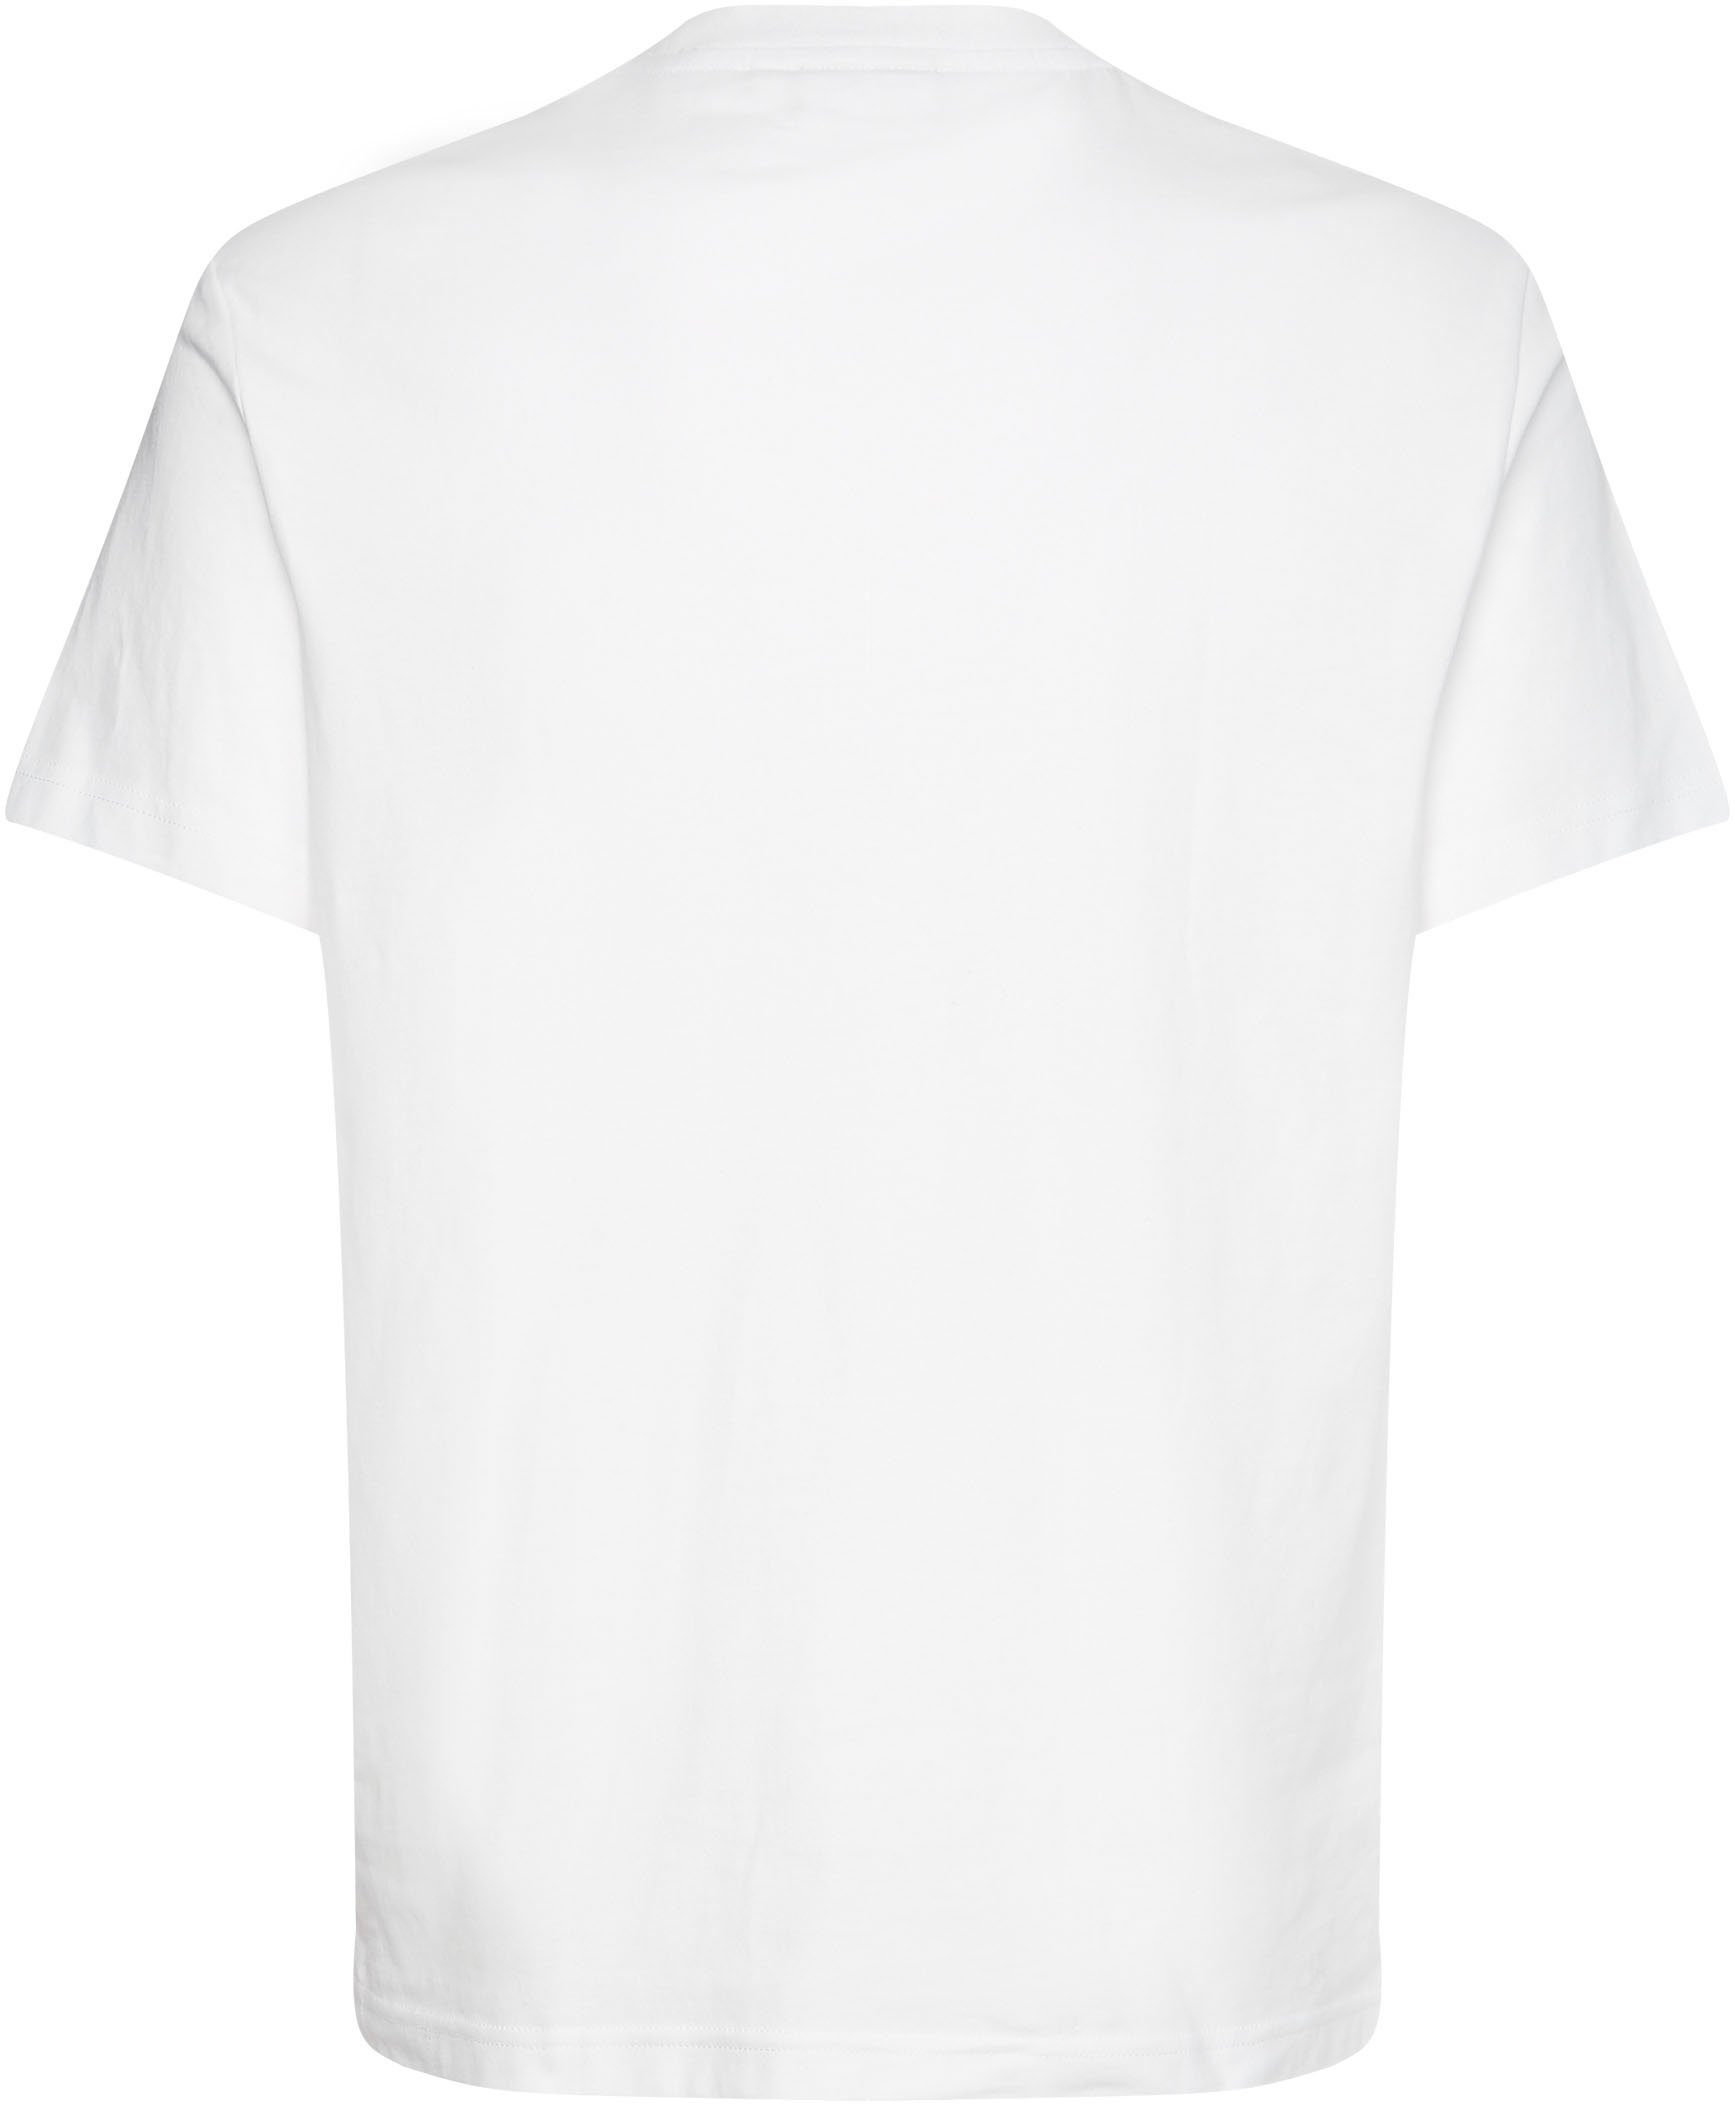 bright Calvin Klein BOX T-SHIRT white GRAPHIC LOGO T-Shirt